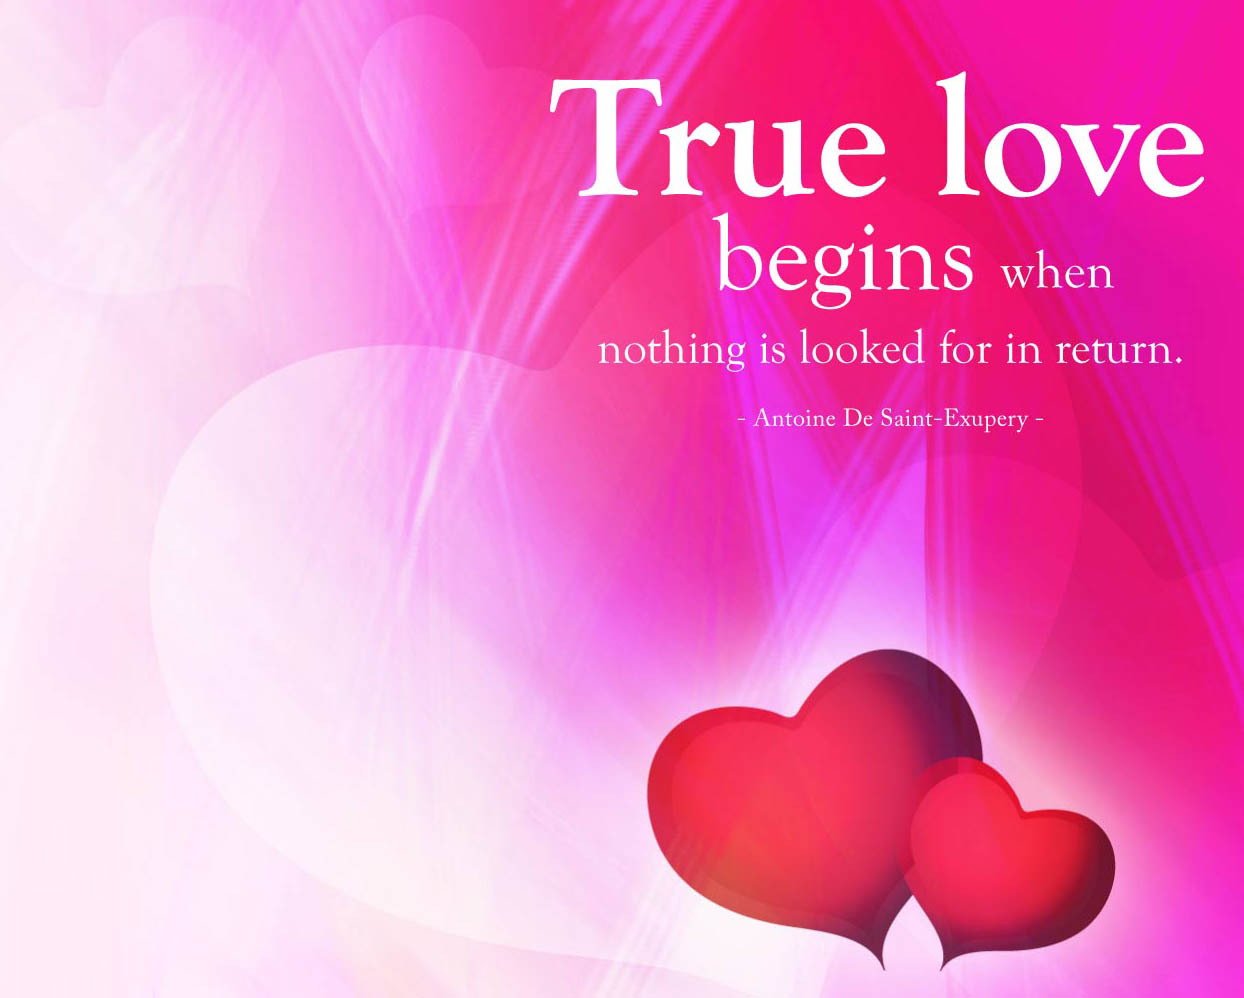 Decent Image Scraps: True love begins when nothing is looked for in return